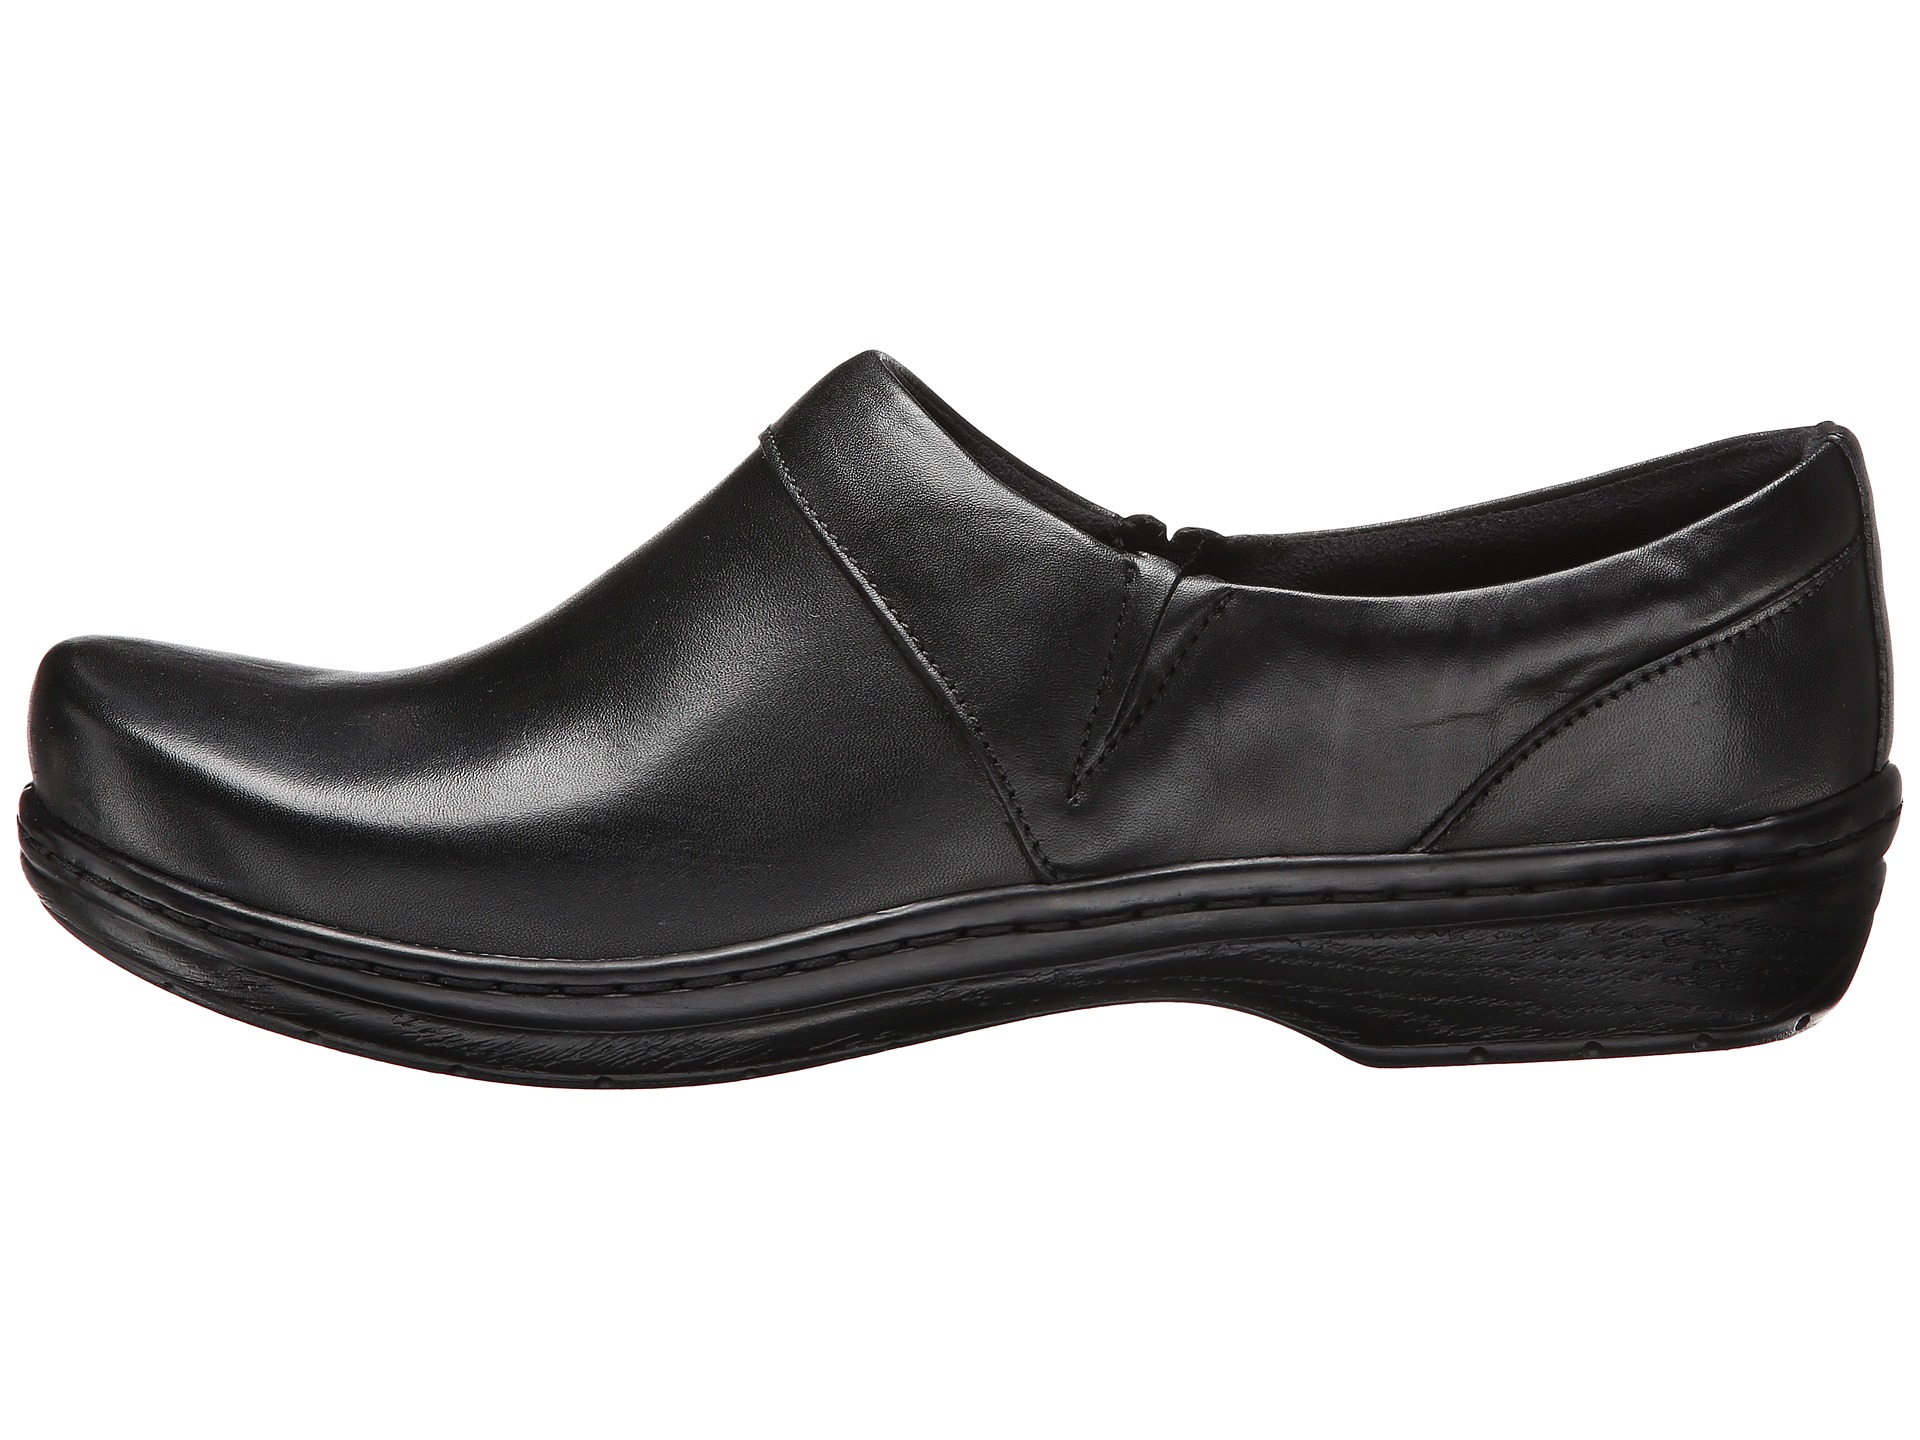 Klogs Footwear Mace Black Smooth - Zappos.com Free Shipping BOTH Ways